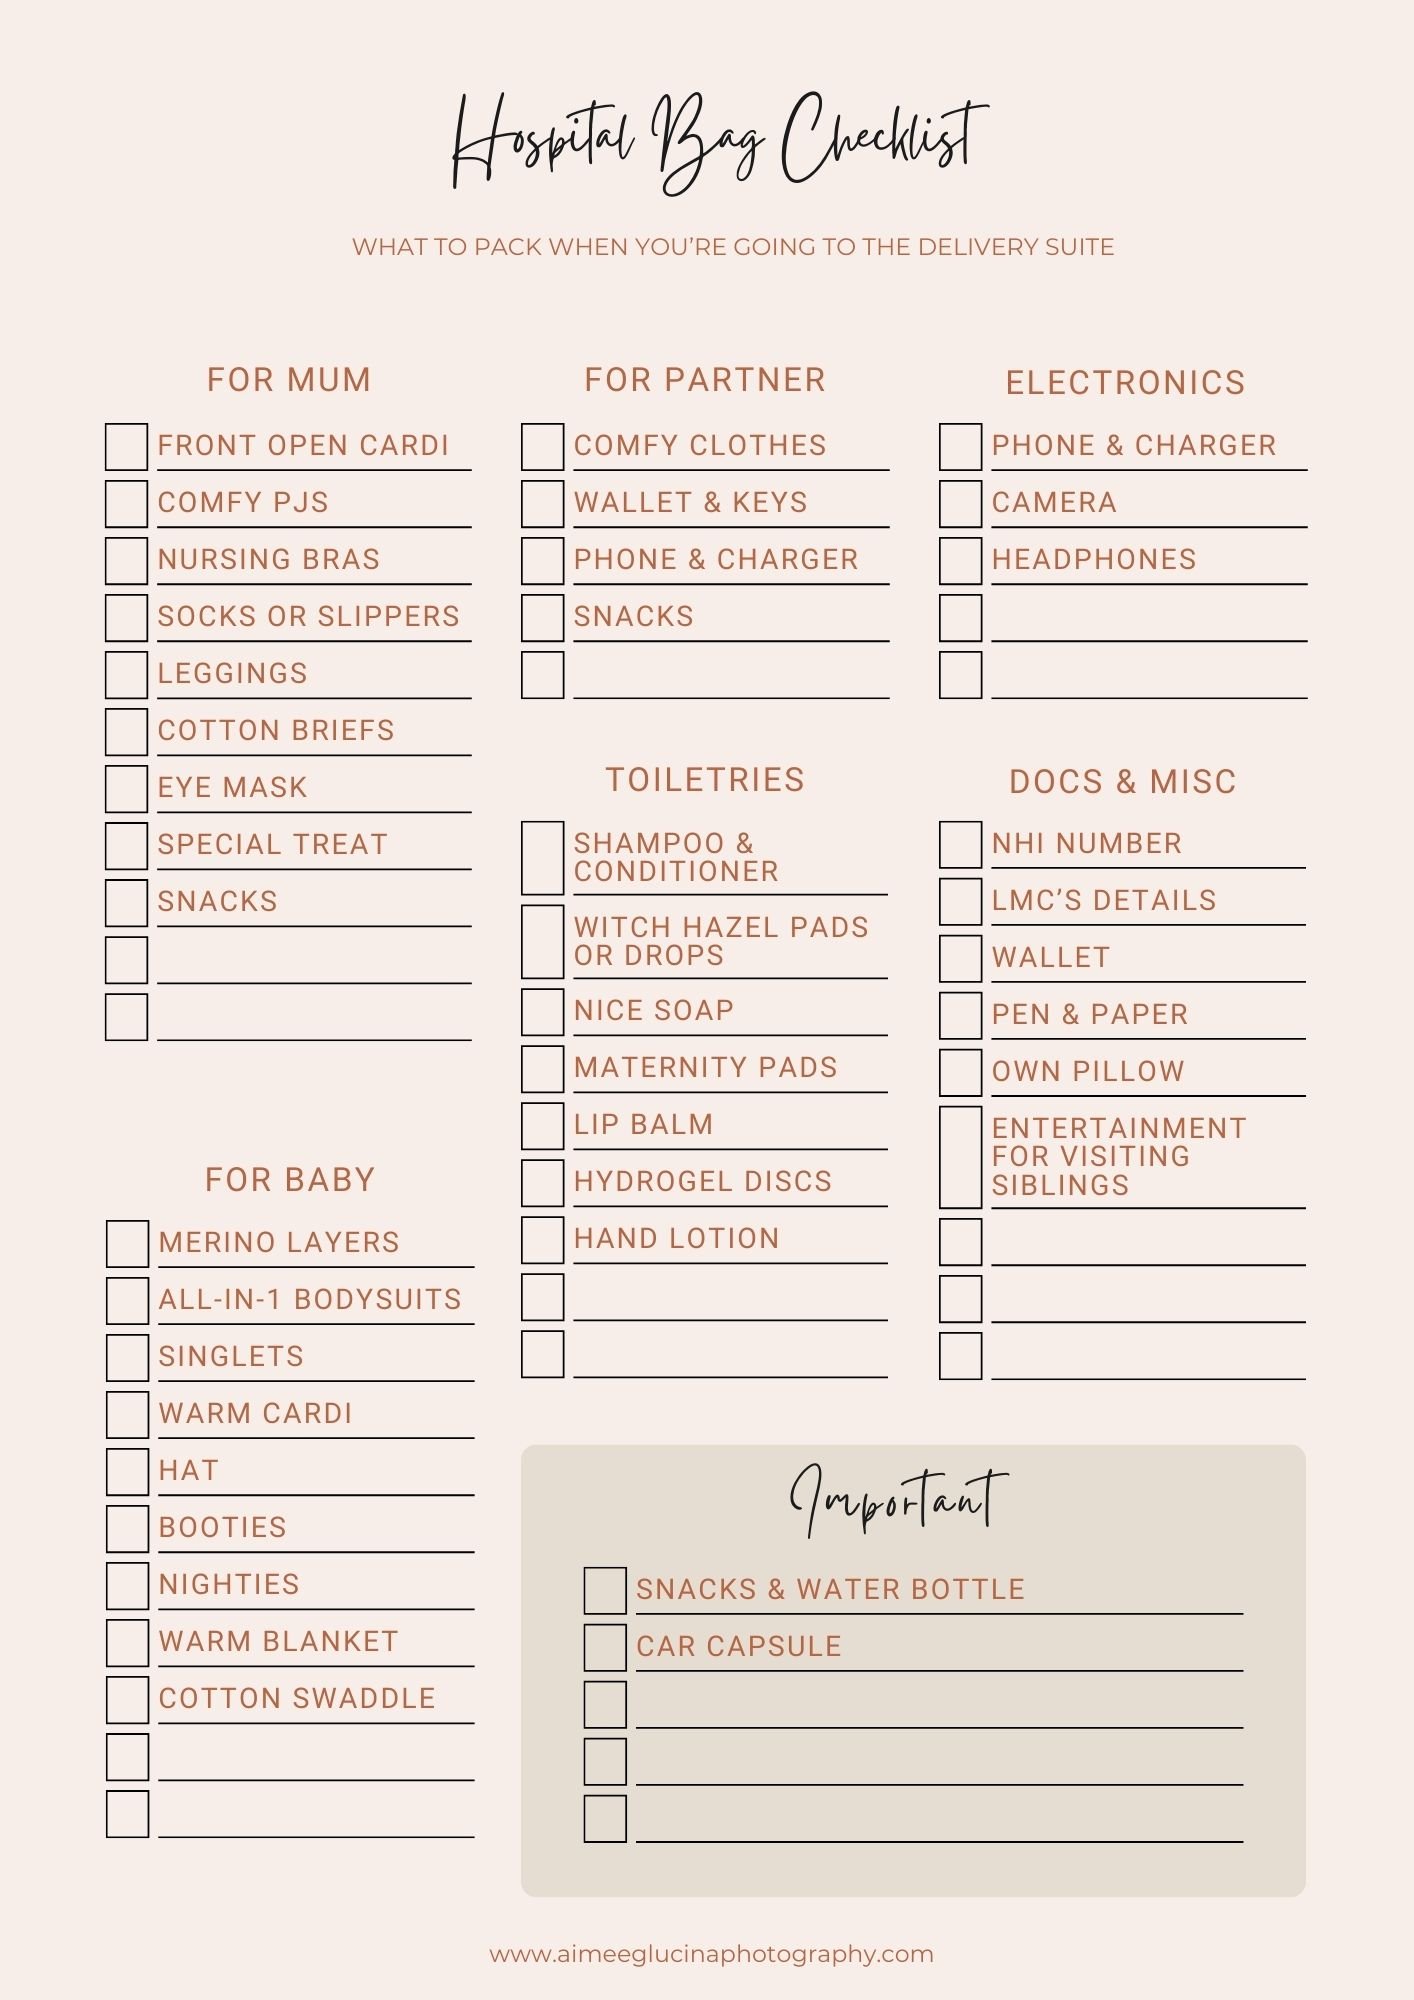 Your Hospital Bag Checklist - Pregnancy & Newborn Magazine